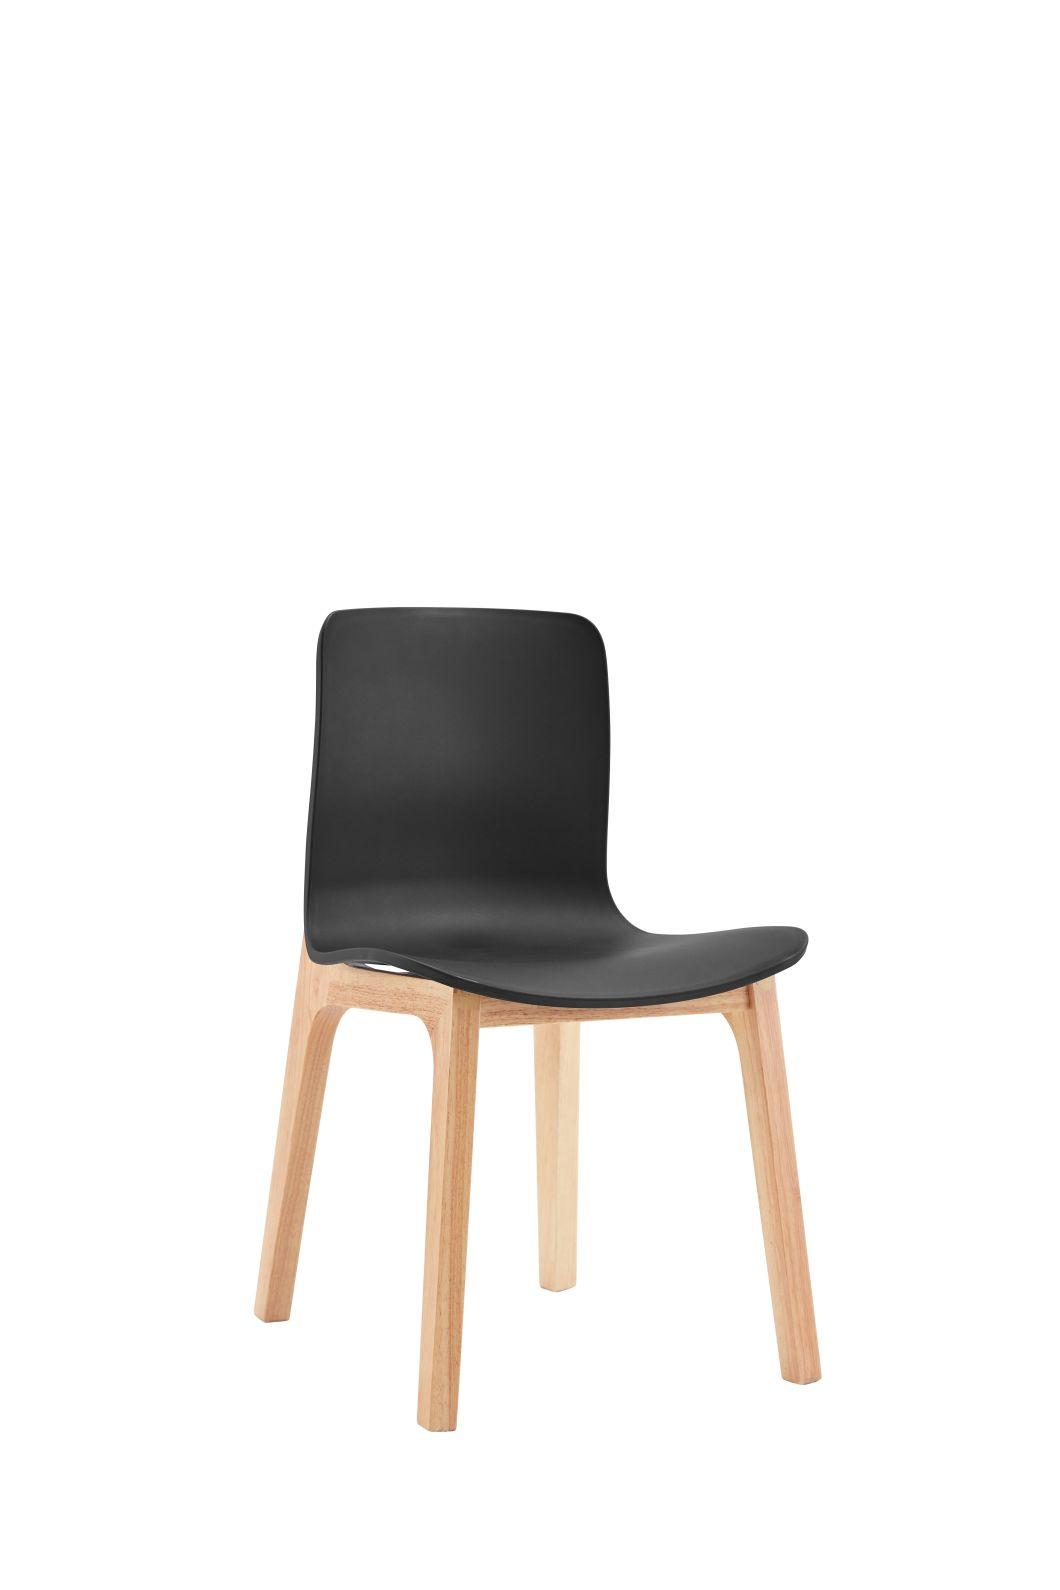 Modern Dinner Restaurant Cafe Hotel Furniture Wooden Legs PP Plastic Dining Chairs